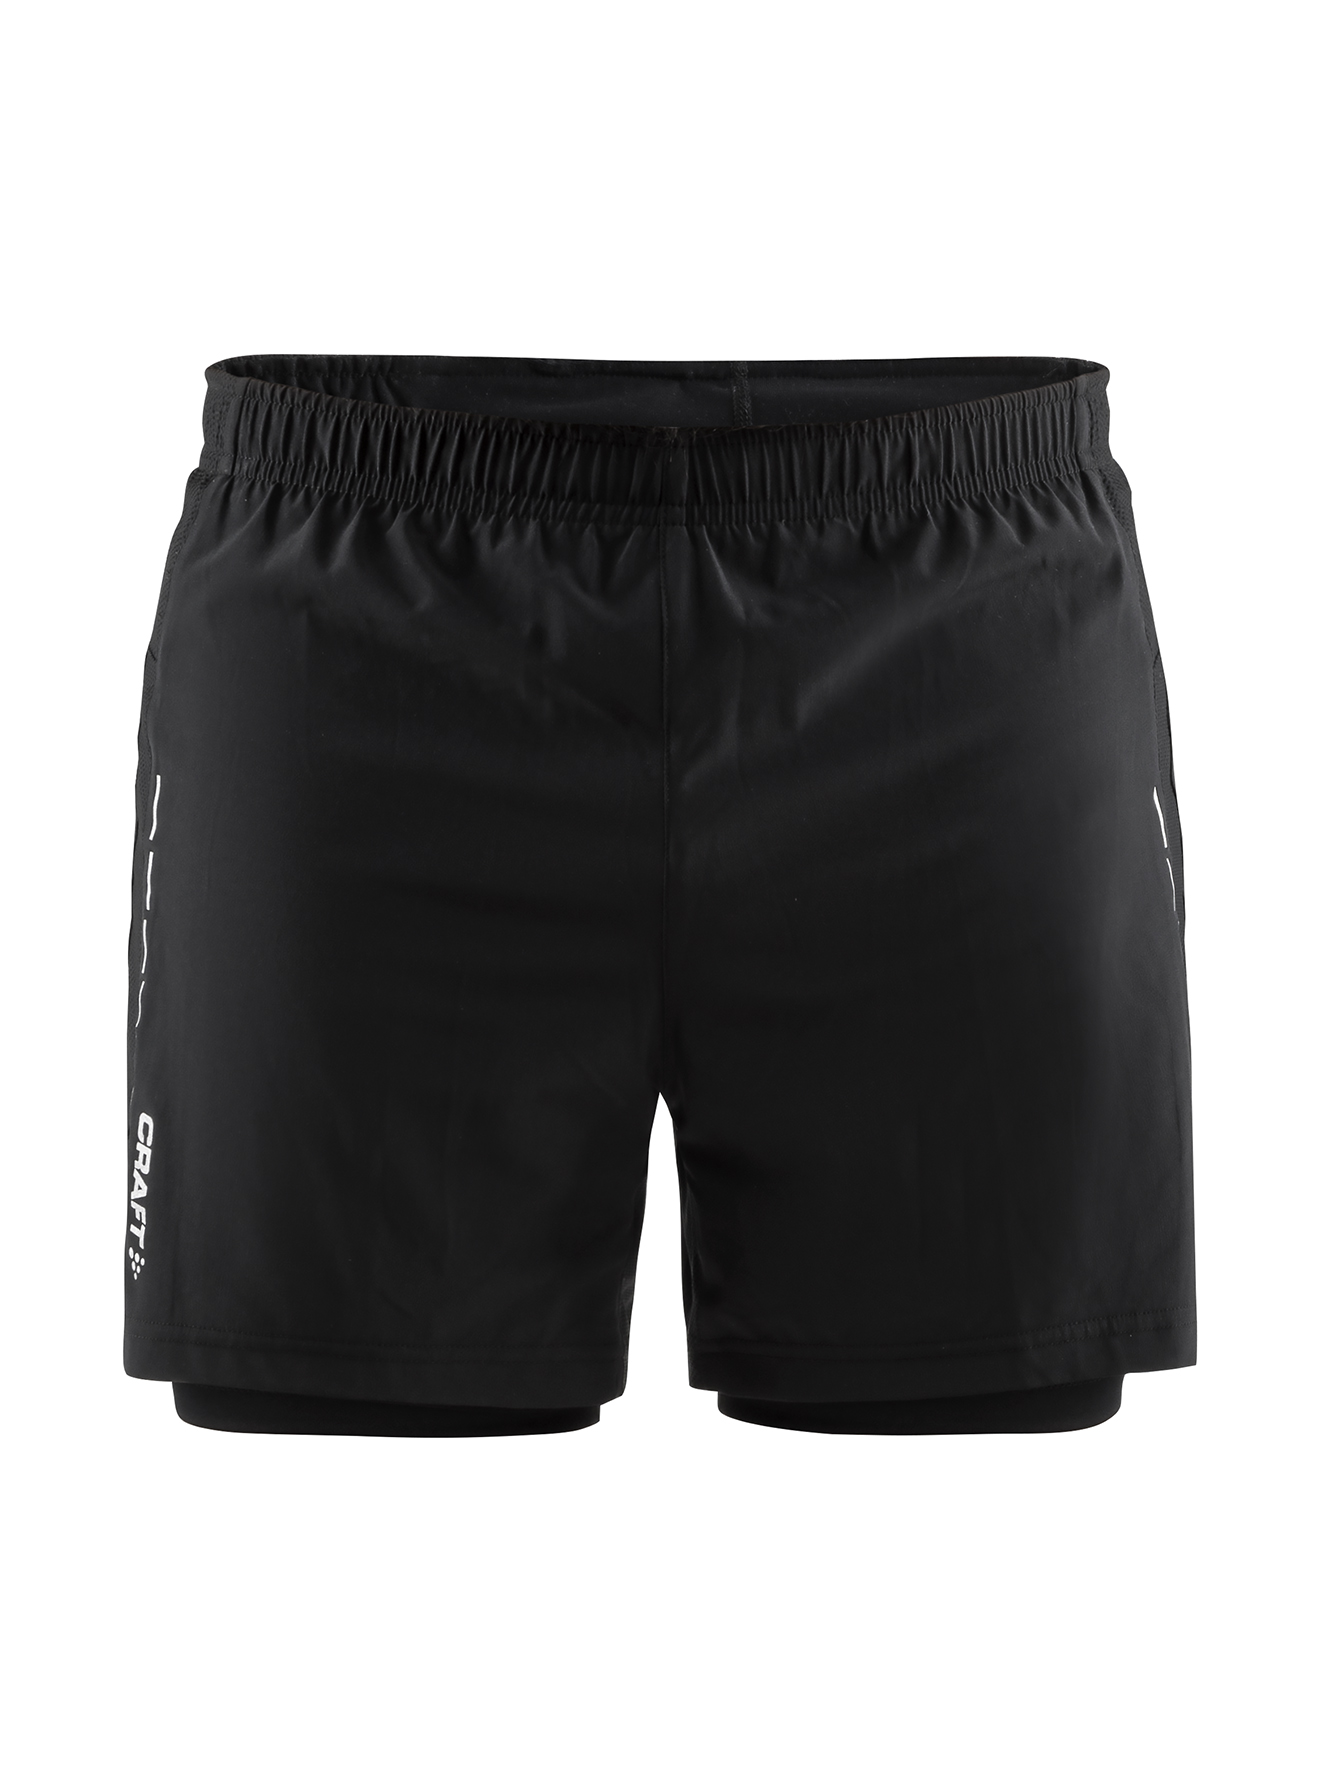 Essential 2-in-1 Shorts | Sportswear - Craft Black M